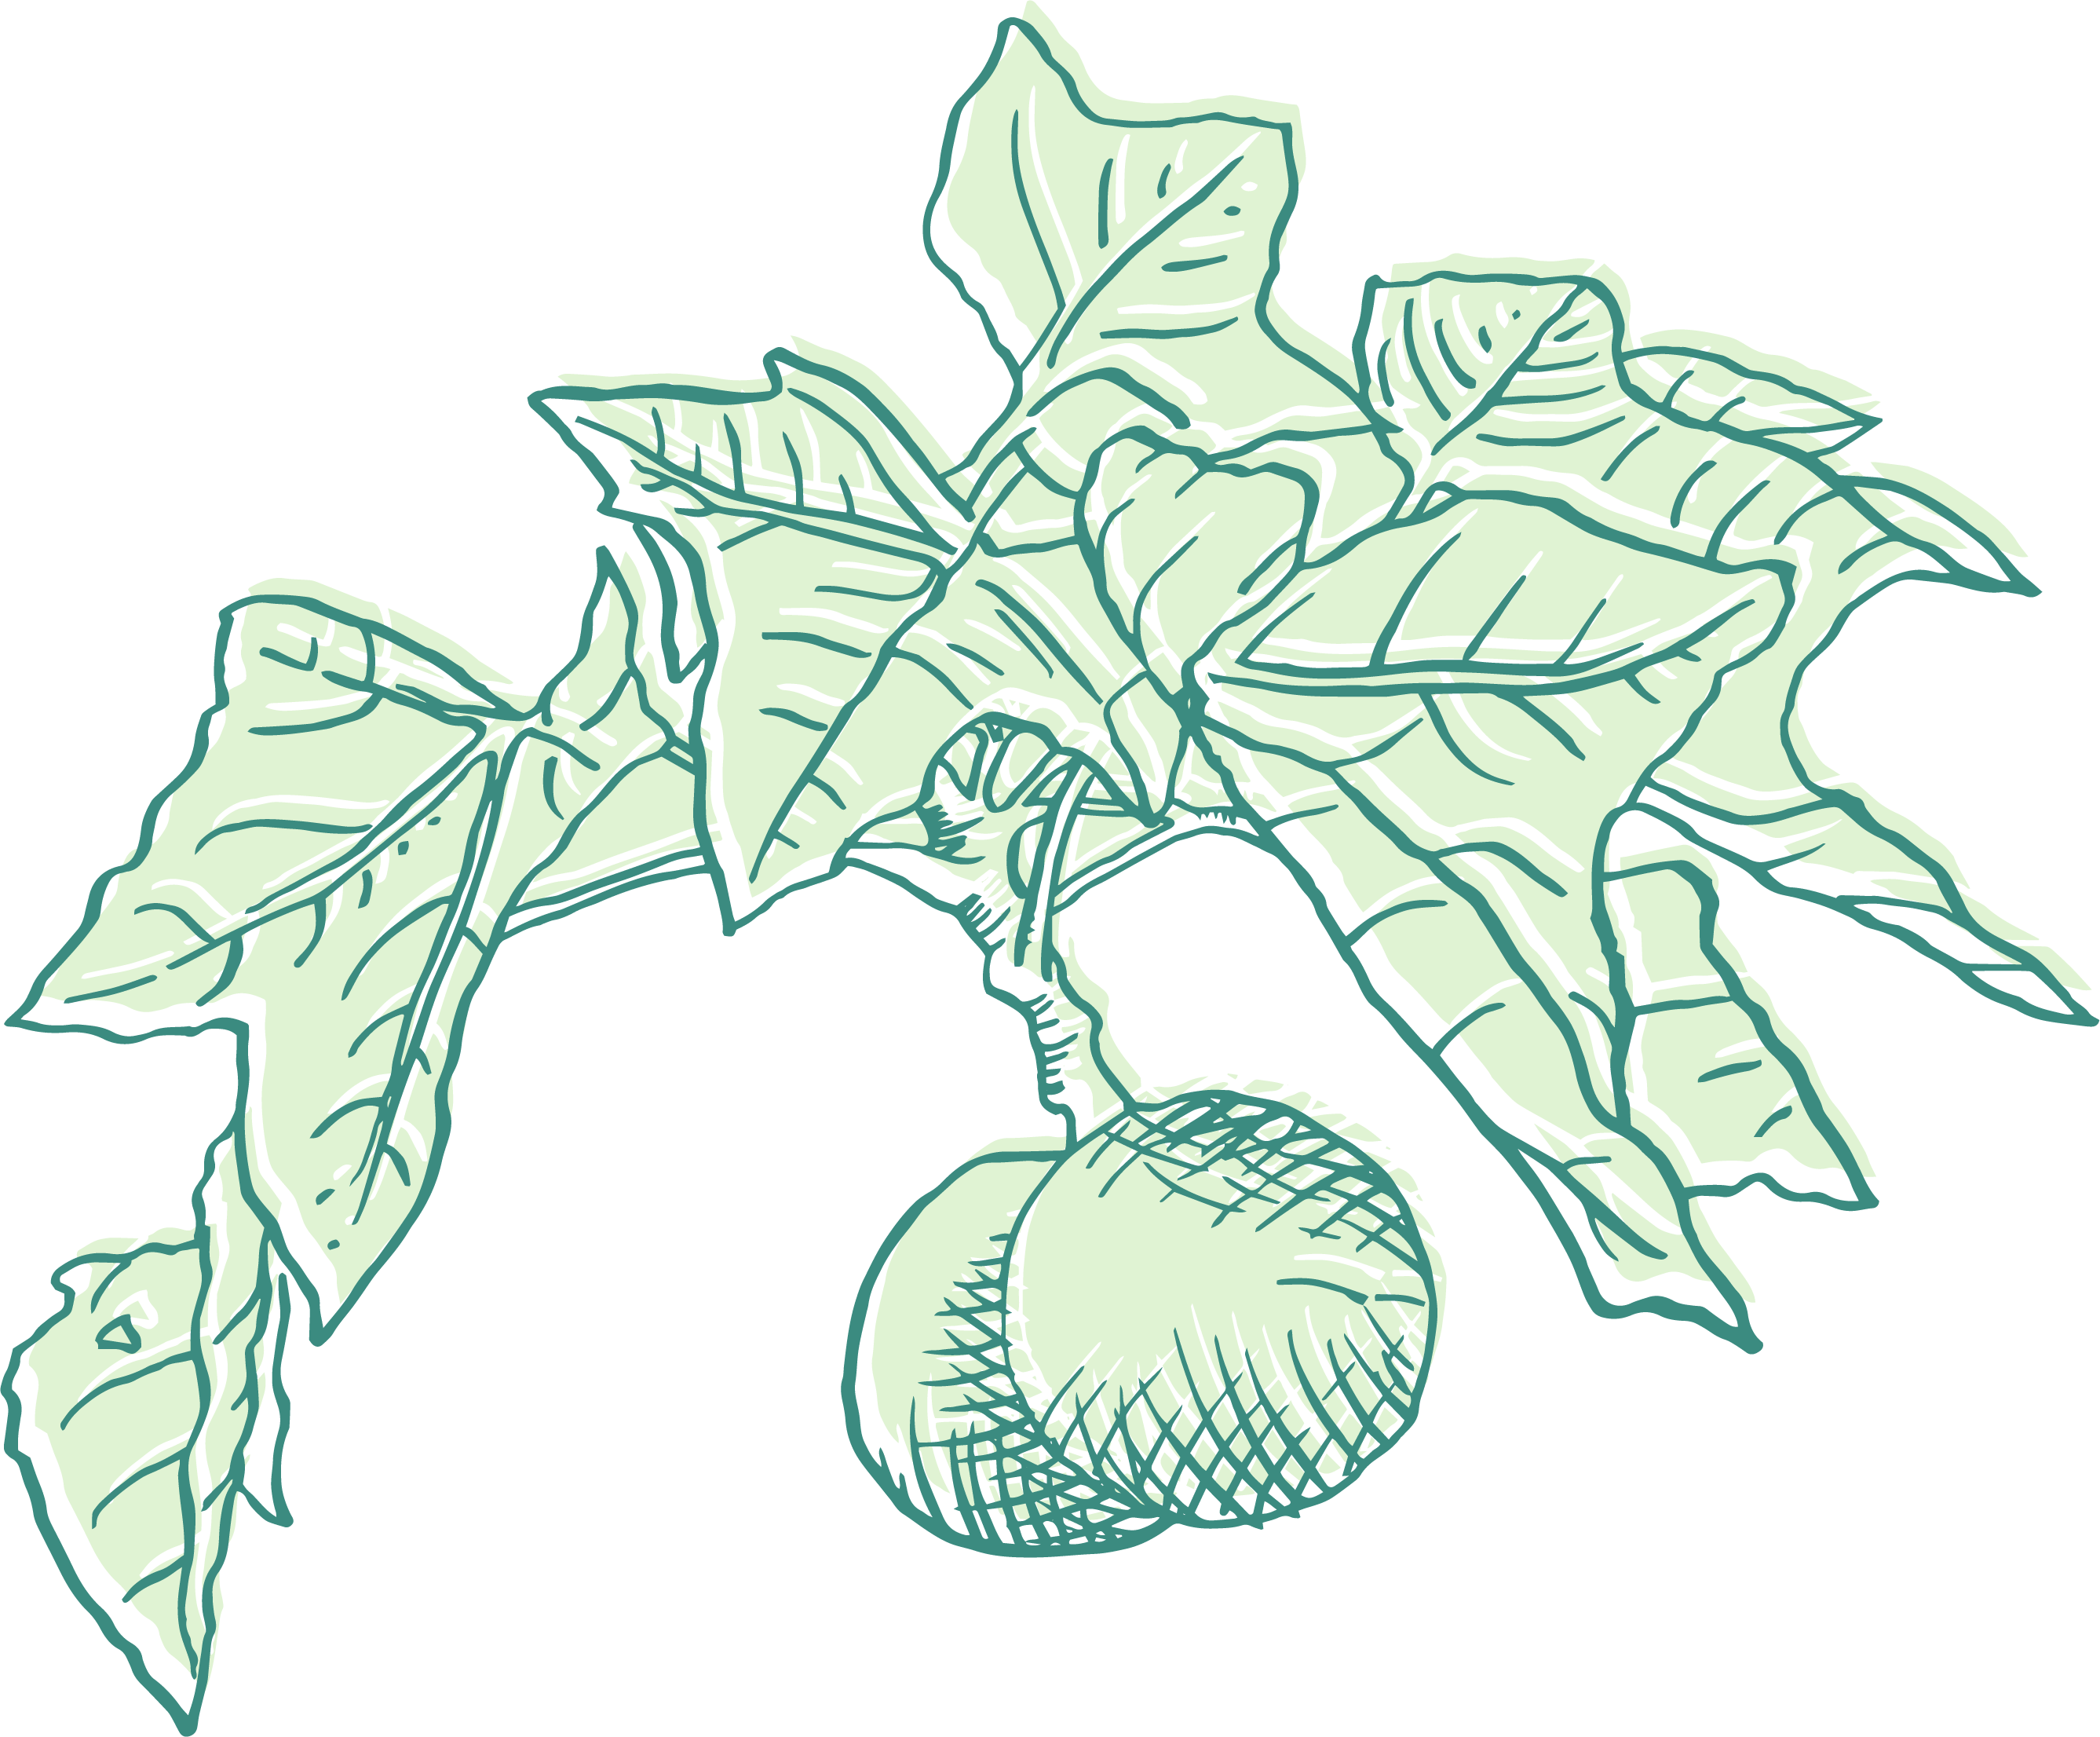 Kukui fruit with leaves hand illustration